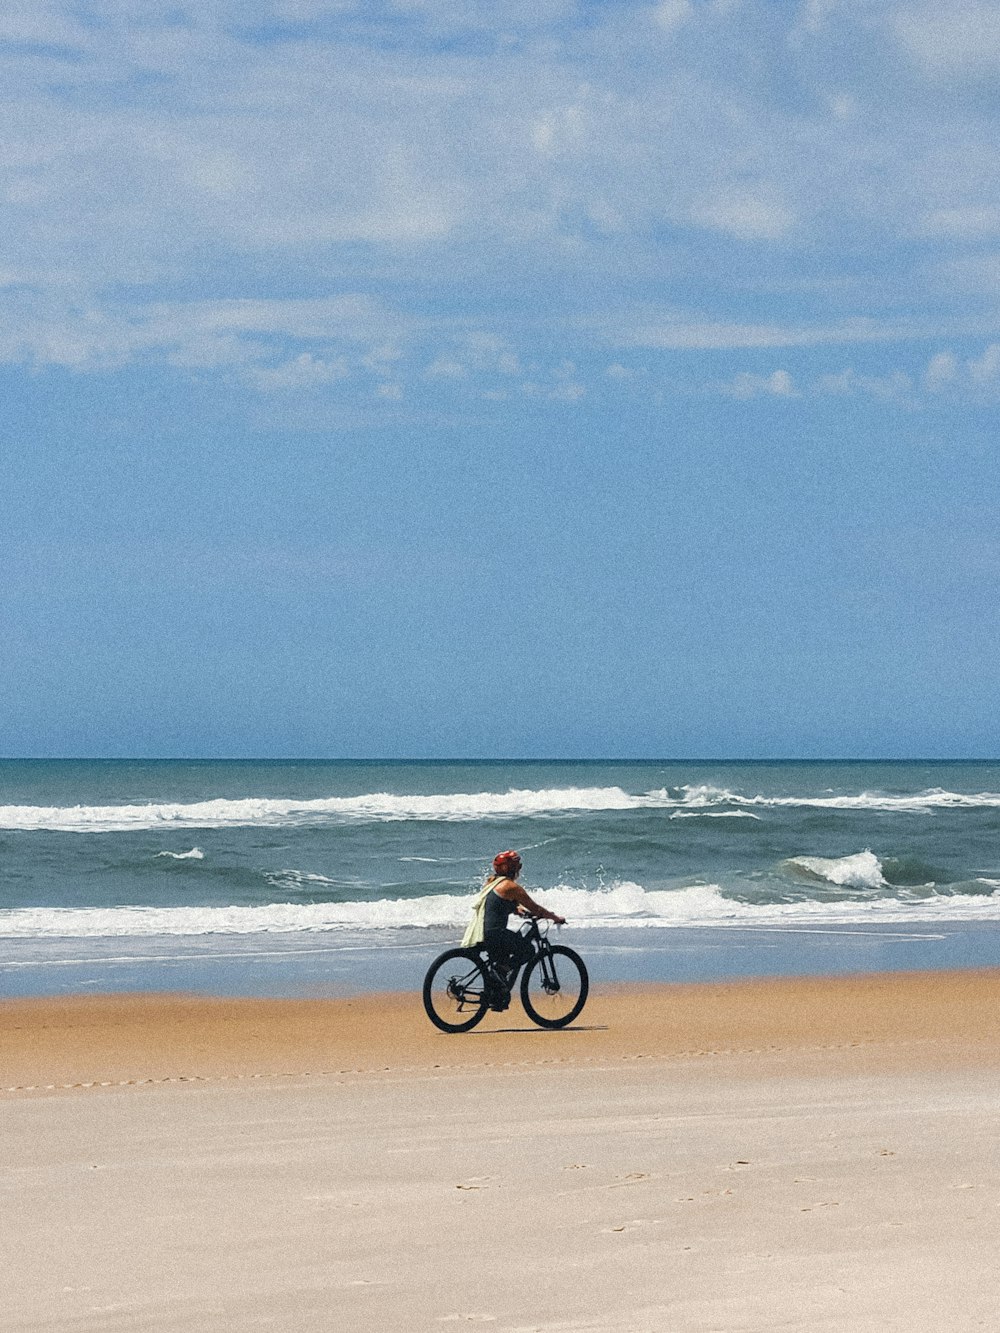 a person riding a bike on the beach